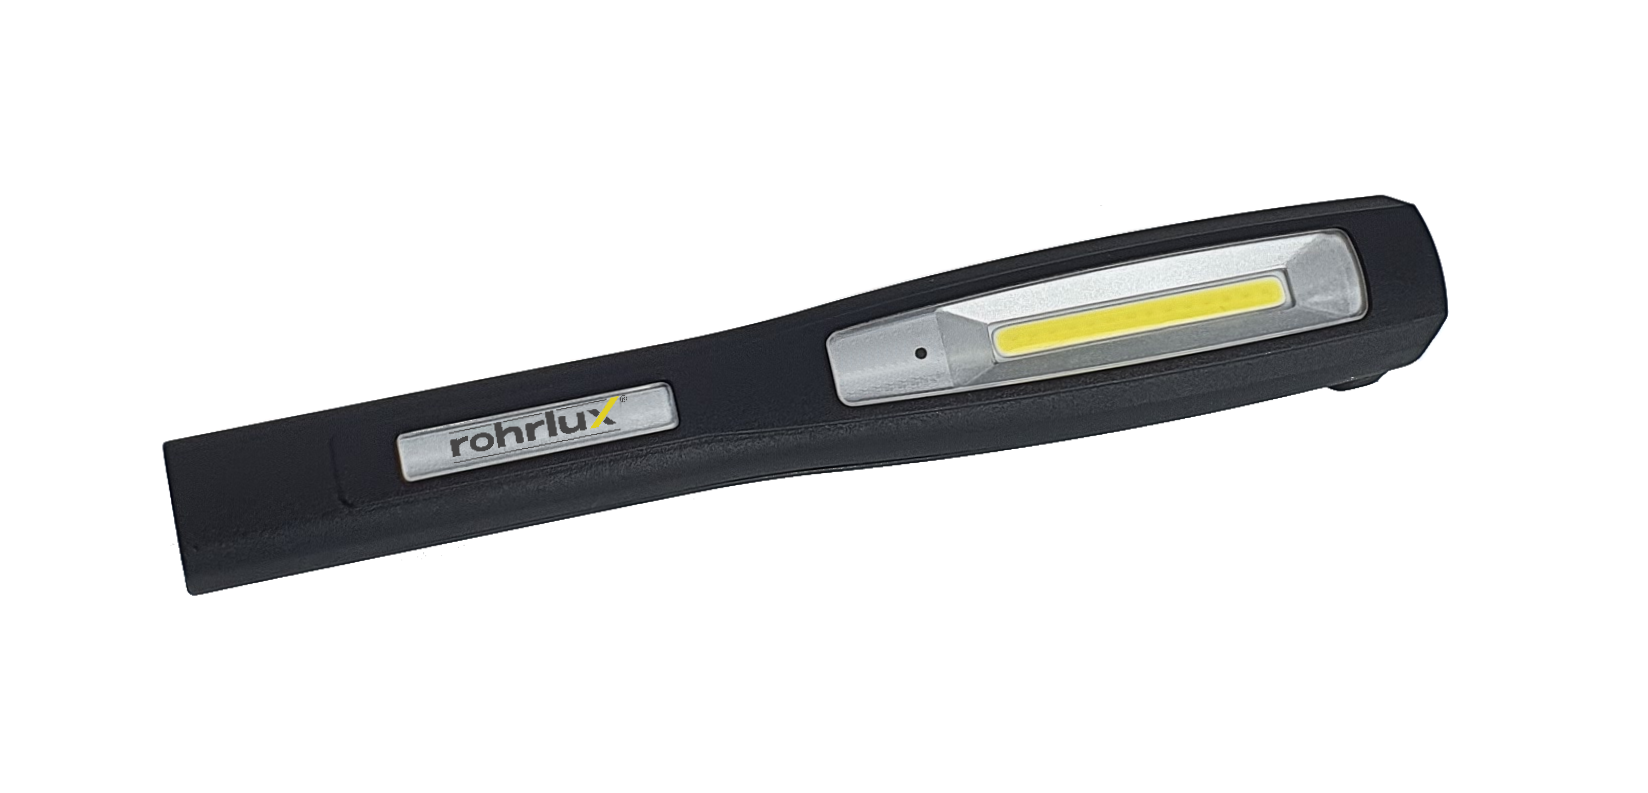 Compact 2 in 1 LED penlight Rohrlux "Mini-Lux" - 150 lumens